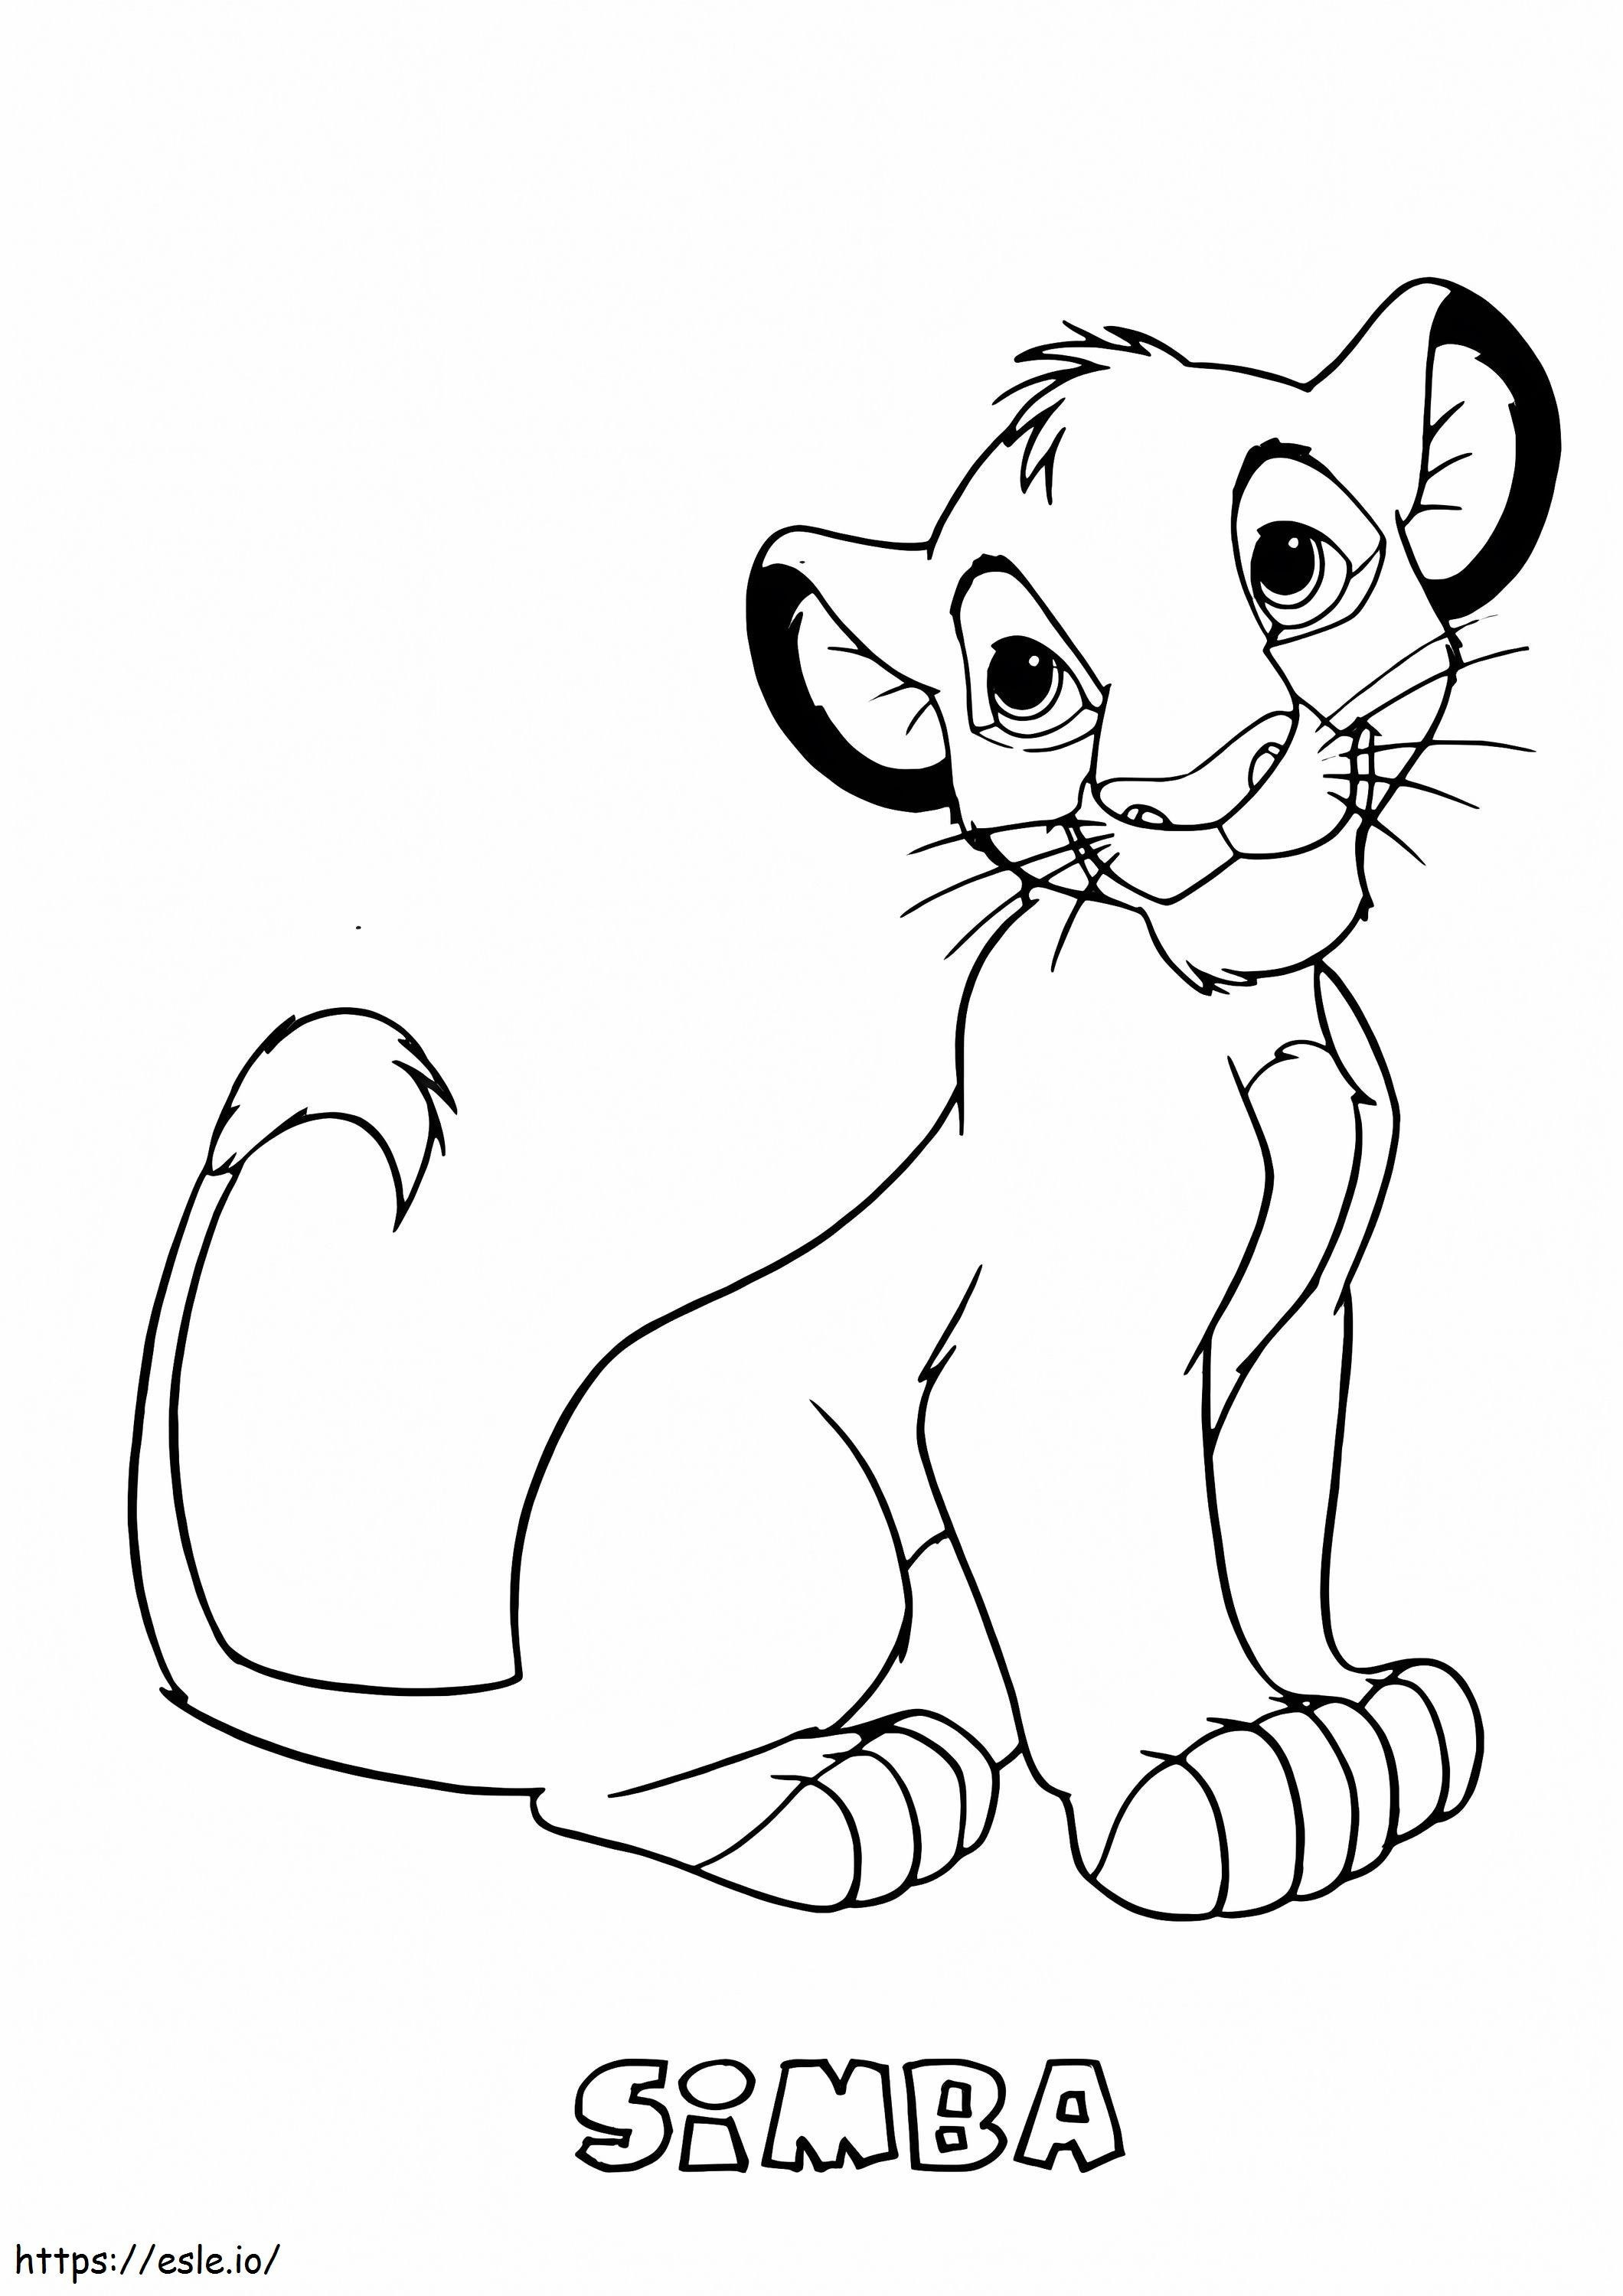 Adorable Simba coloring page